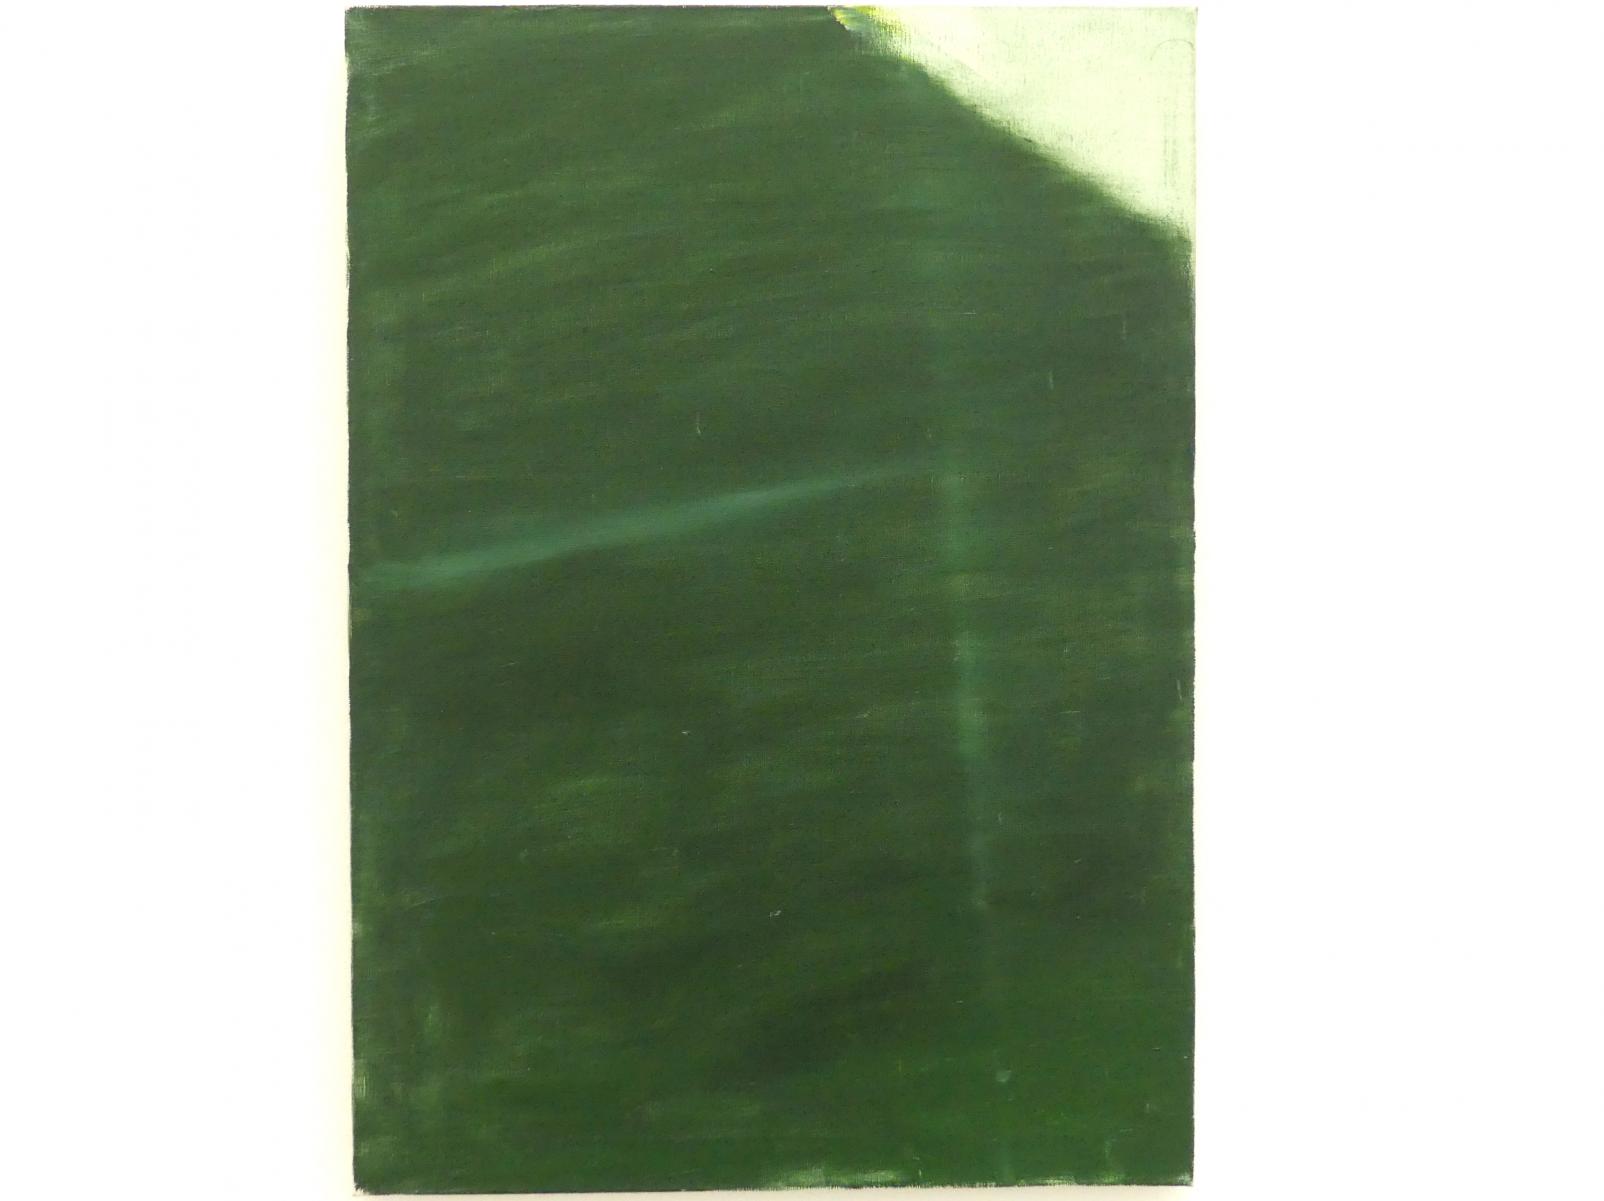 Raoul De Keyser (1964–2012), Untitled, München, Pinakothek der Moderne, Ausstellung "Raoul De Keyser – Œuvre" vom 05.04.-08.09.2019, Saal 21, 1988